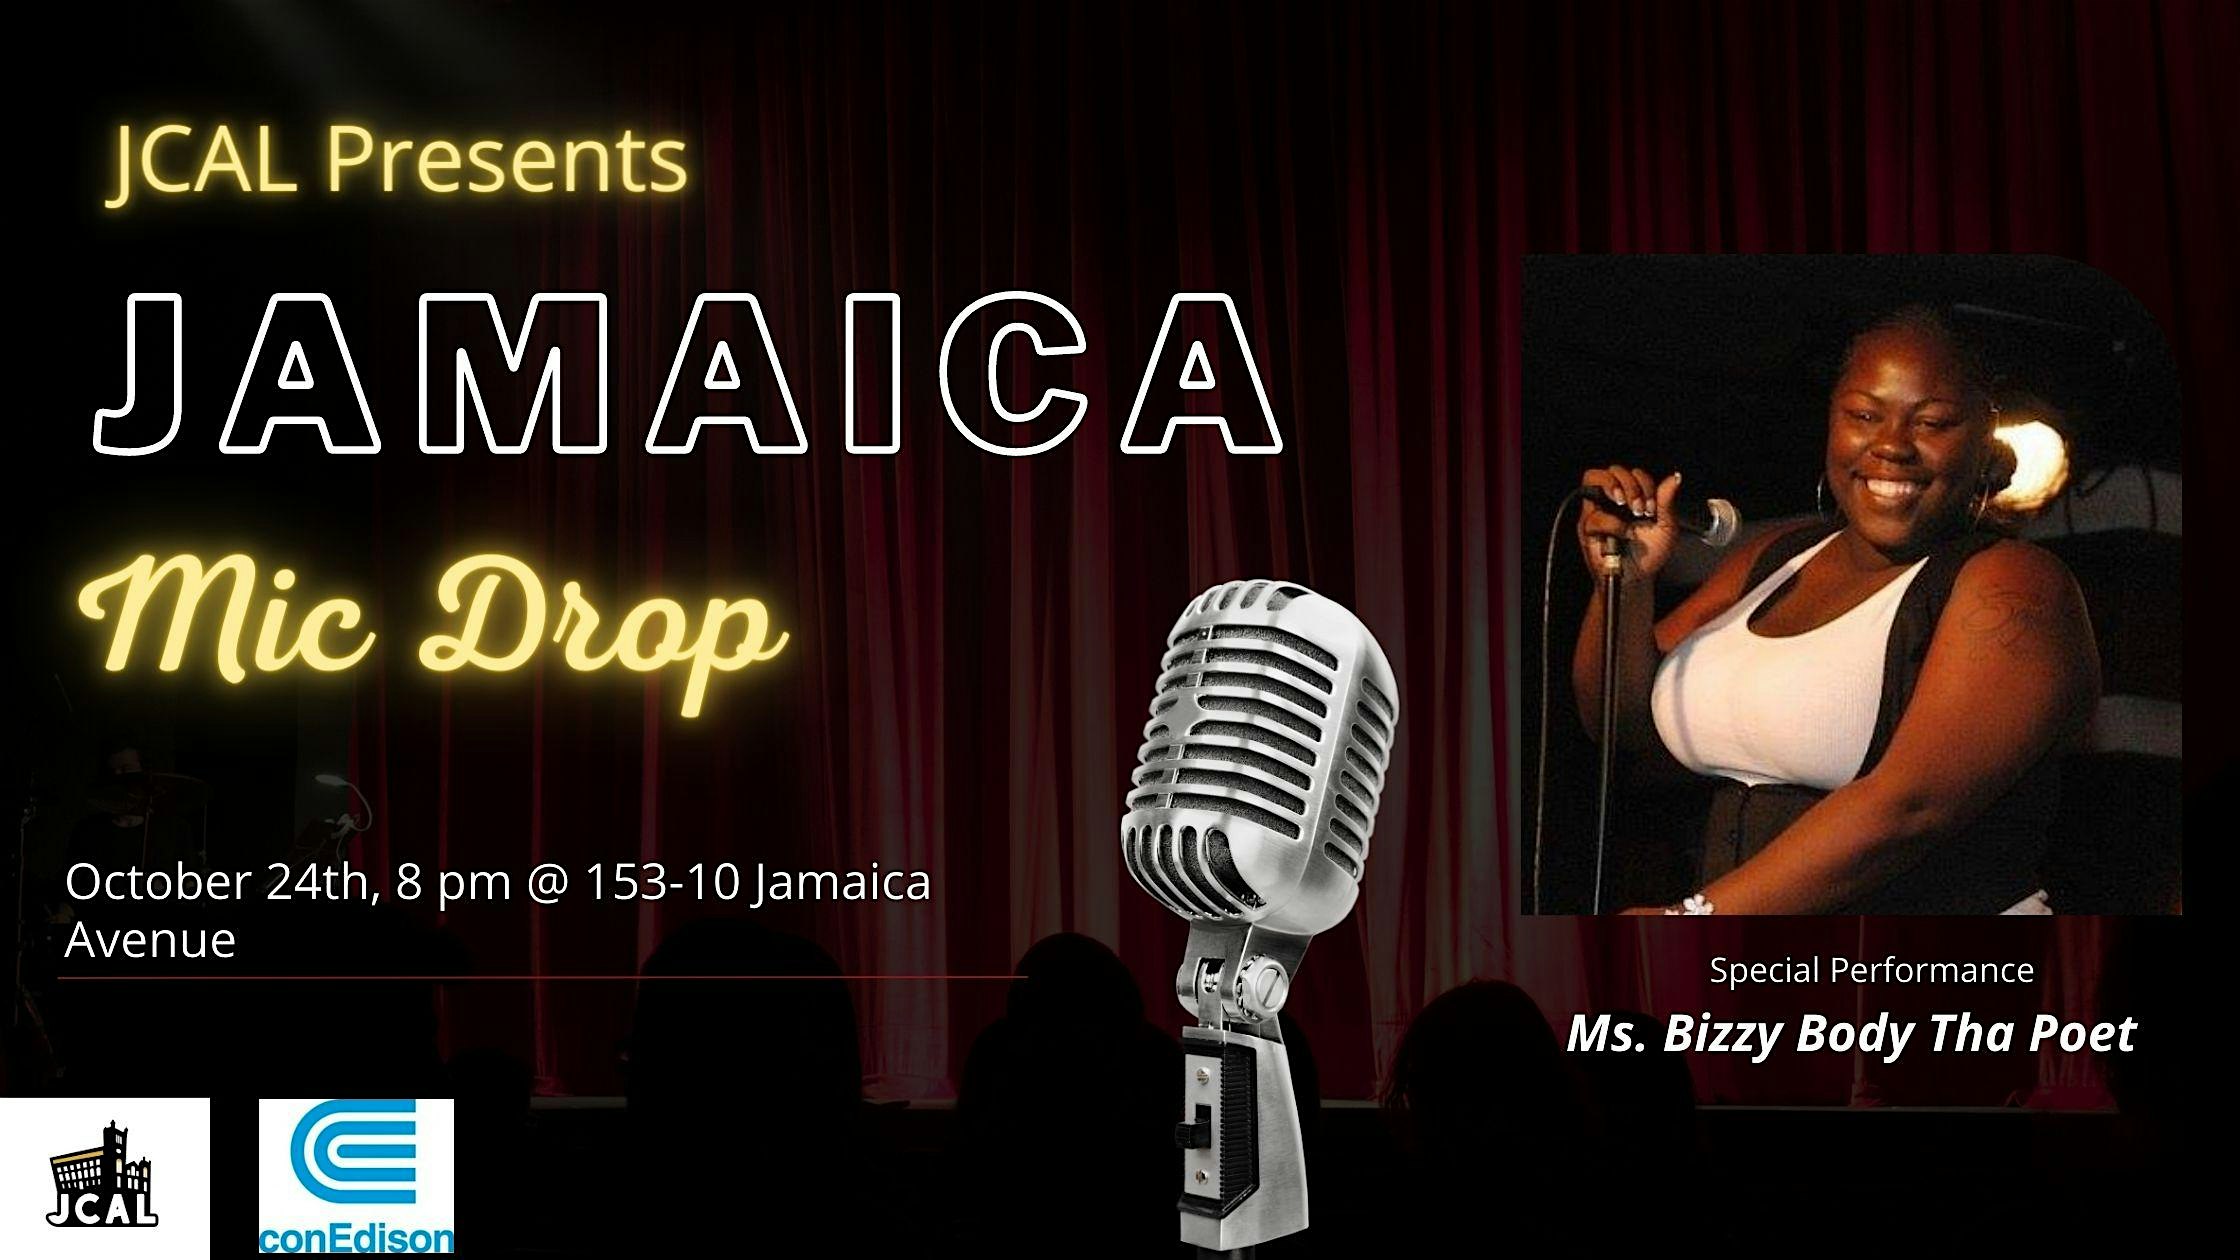 Jamaica Mic Drop Presents: Ms. Bizzy Body Tha Poet